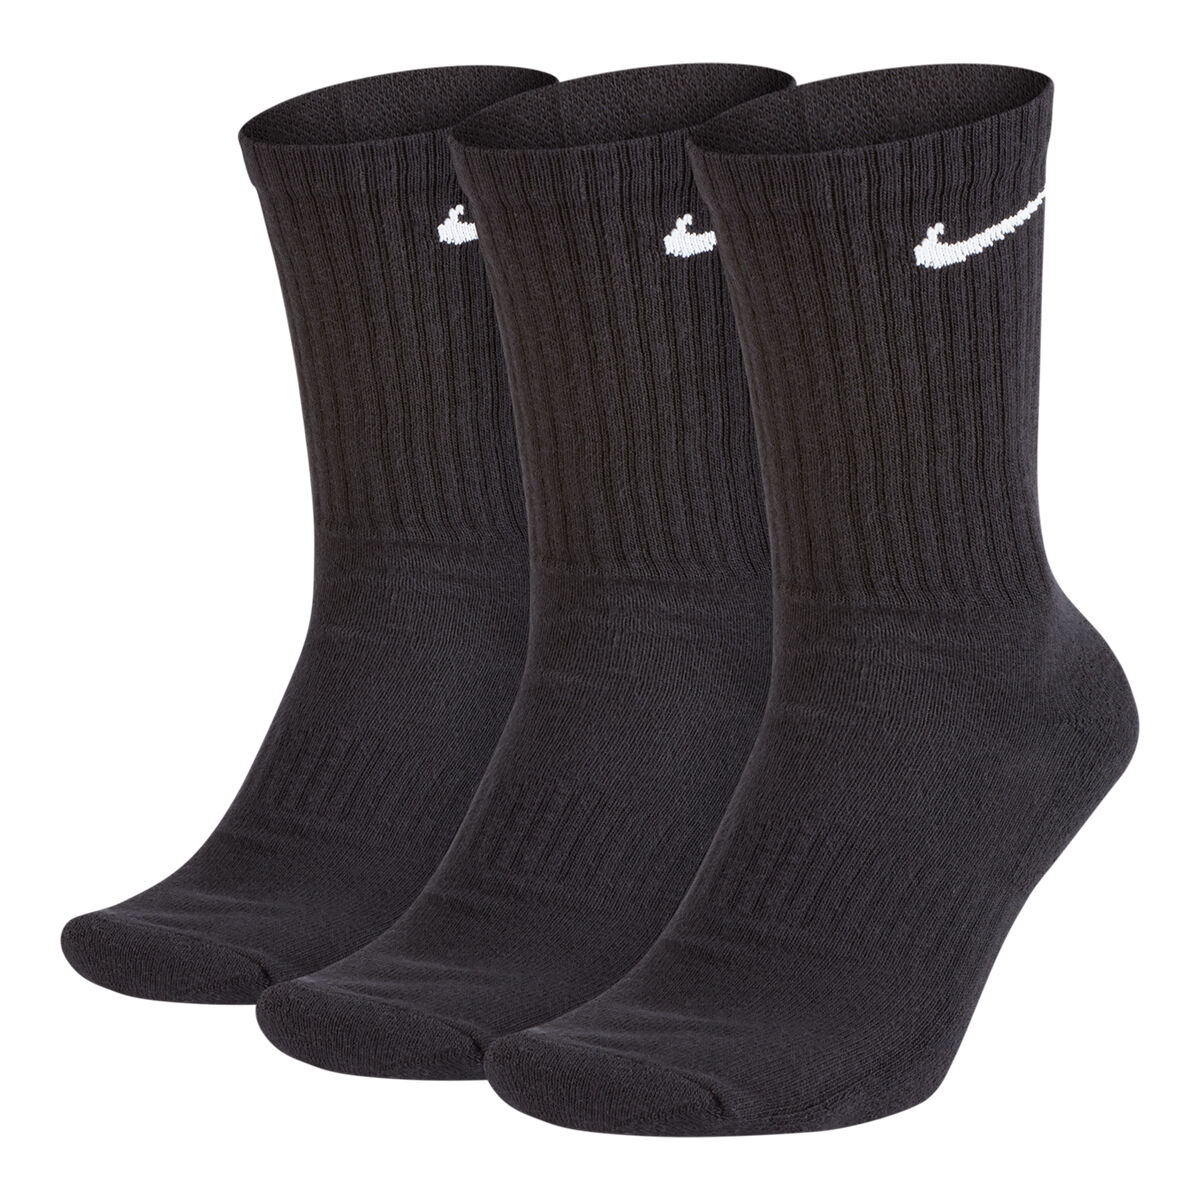 Nike Cushion Cushion Crew 3 Pack Socks 